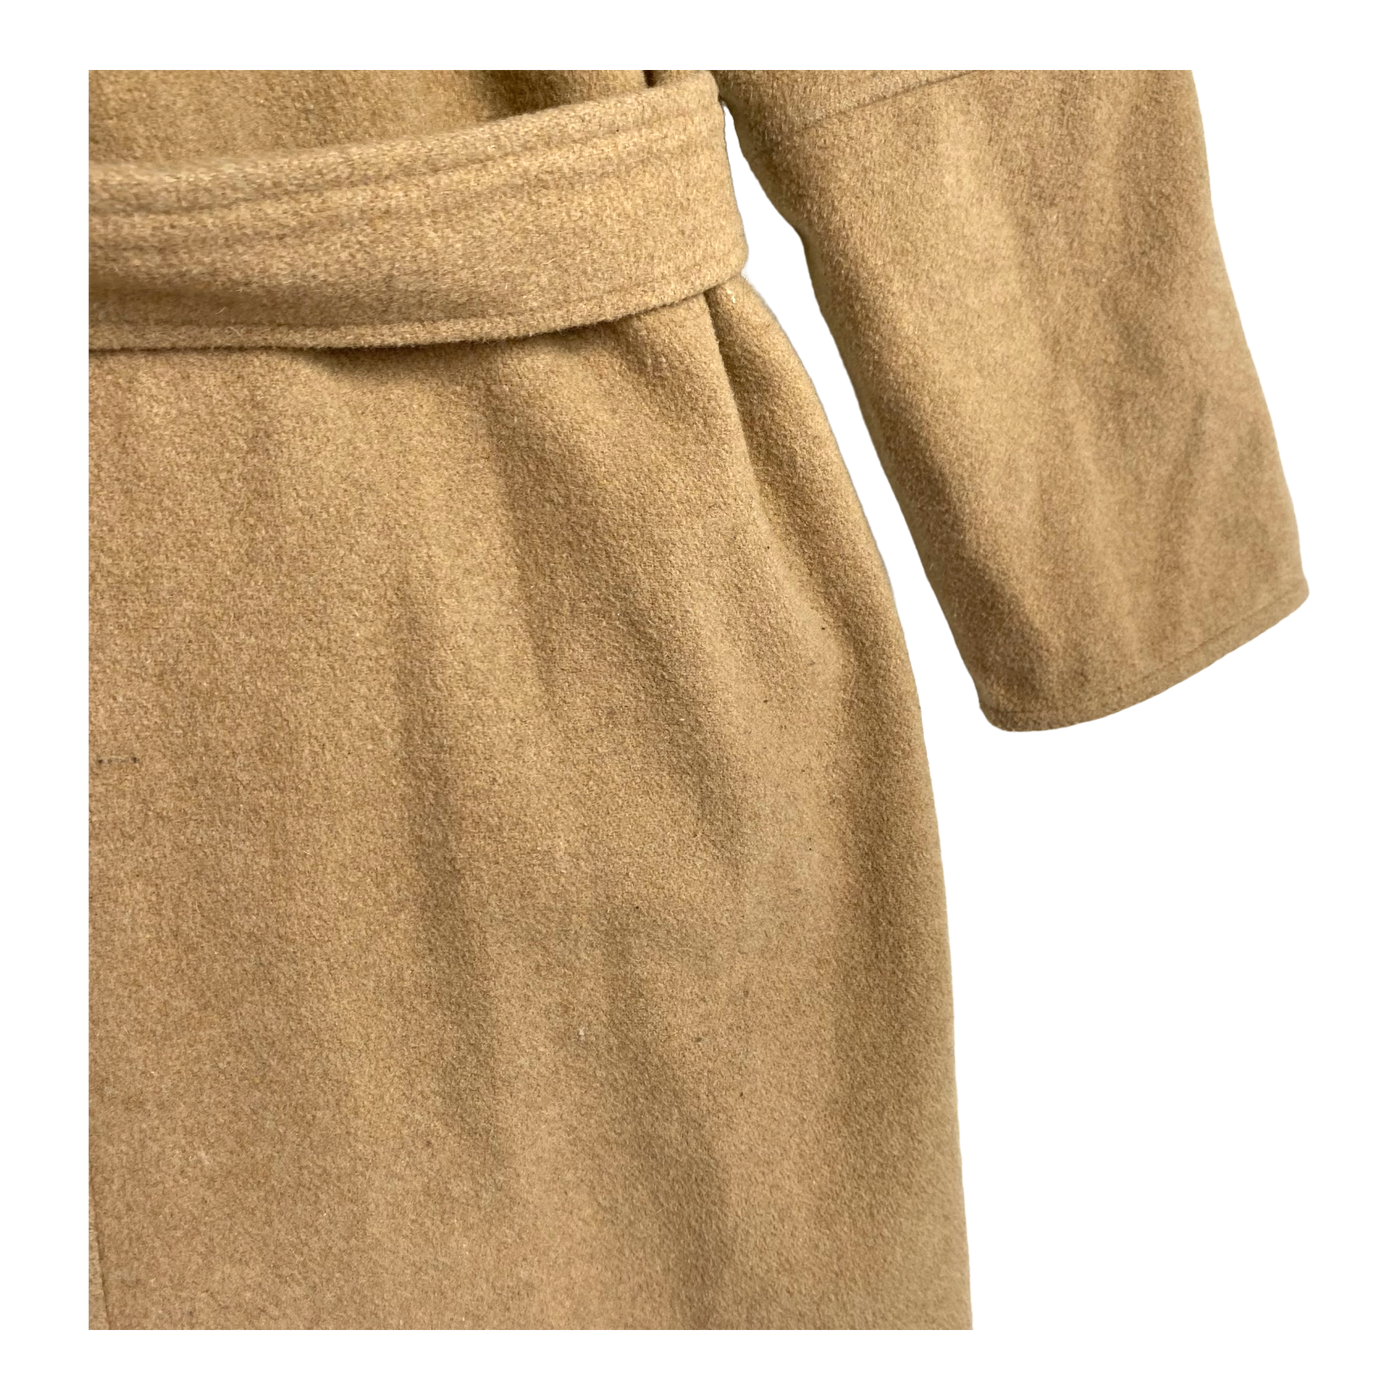 Brixtol Textile lazaar coat, sand brown | woman XS